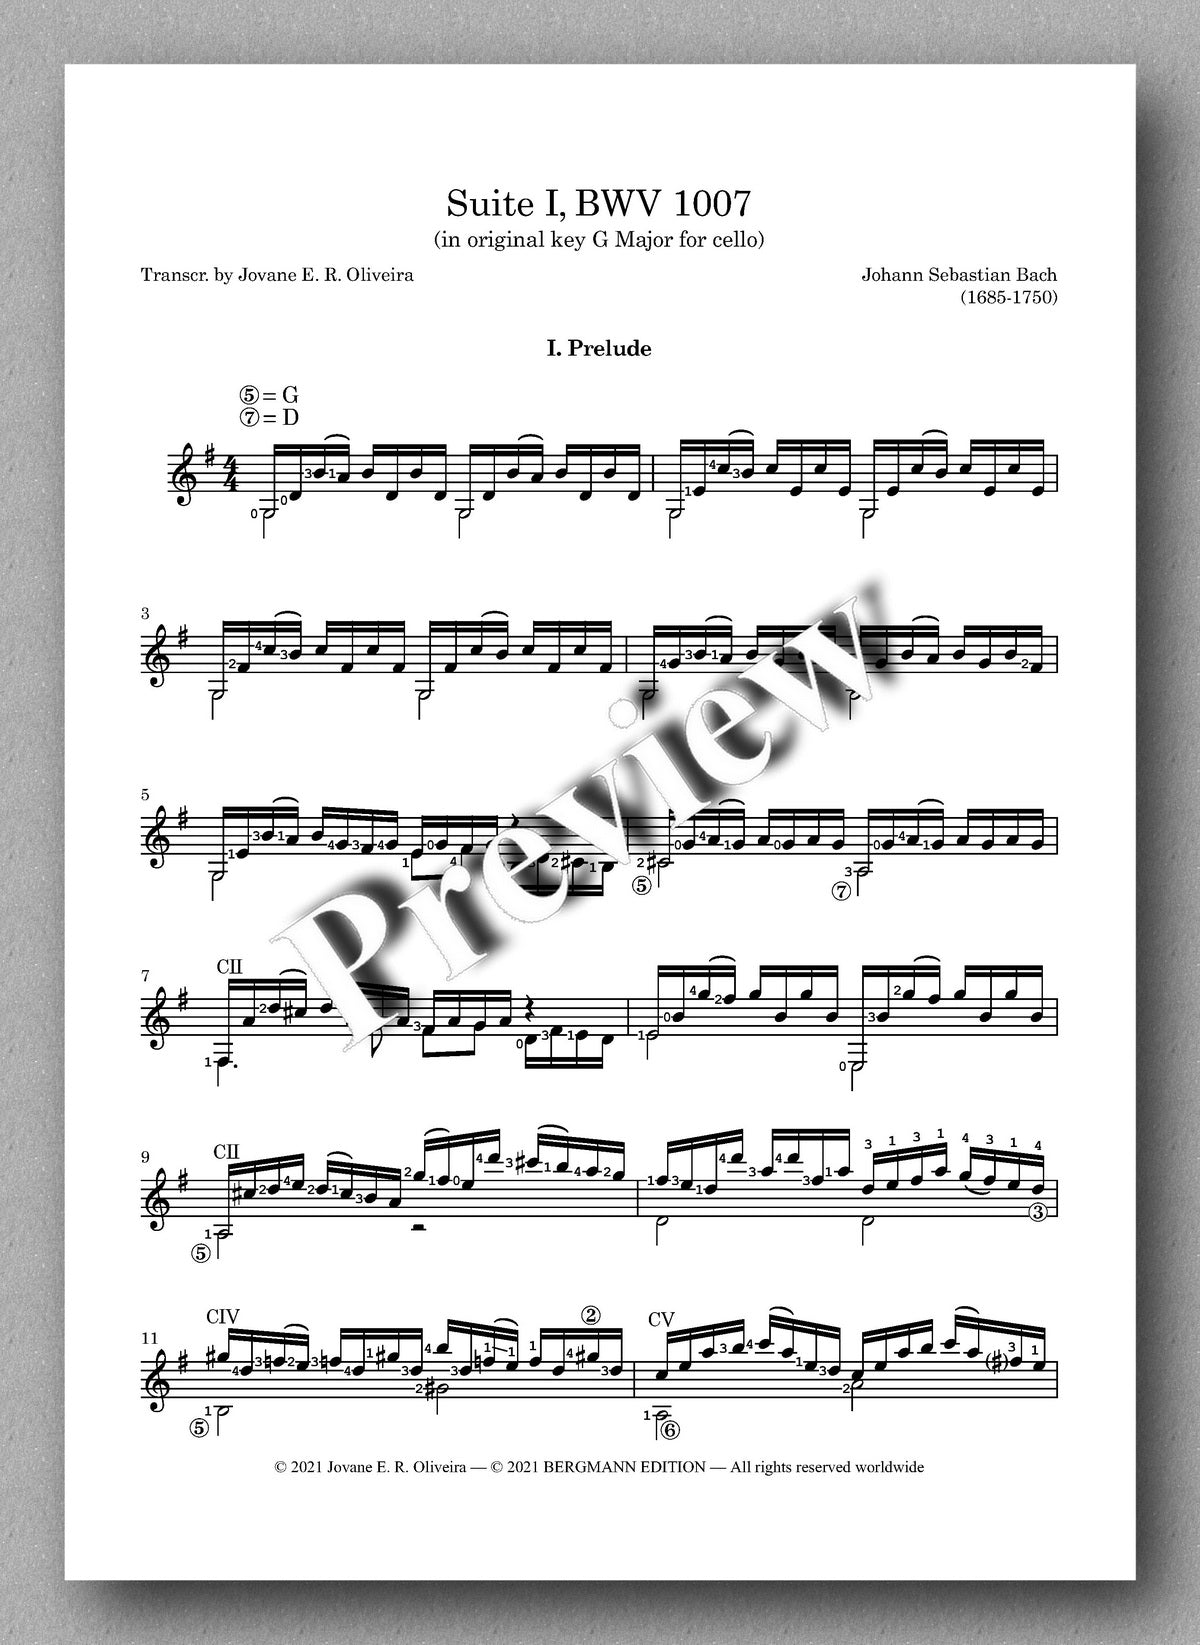 Bach-Oliveira, Cello Suite No 1, BWV 1007 - 7 strings